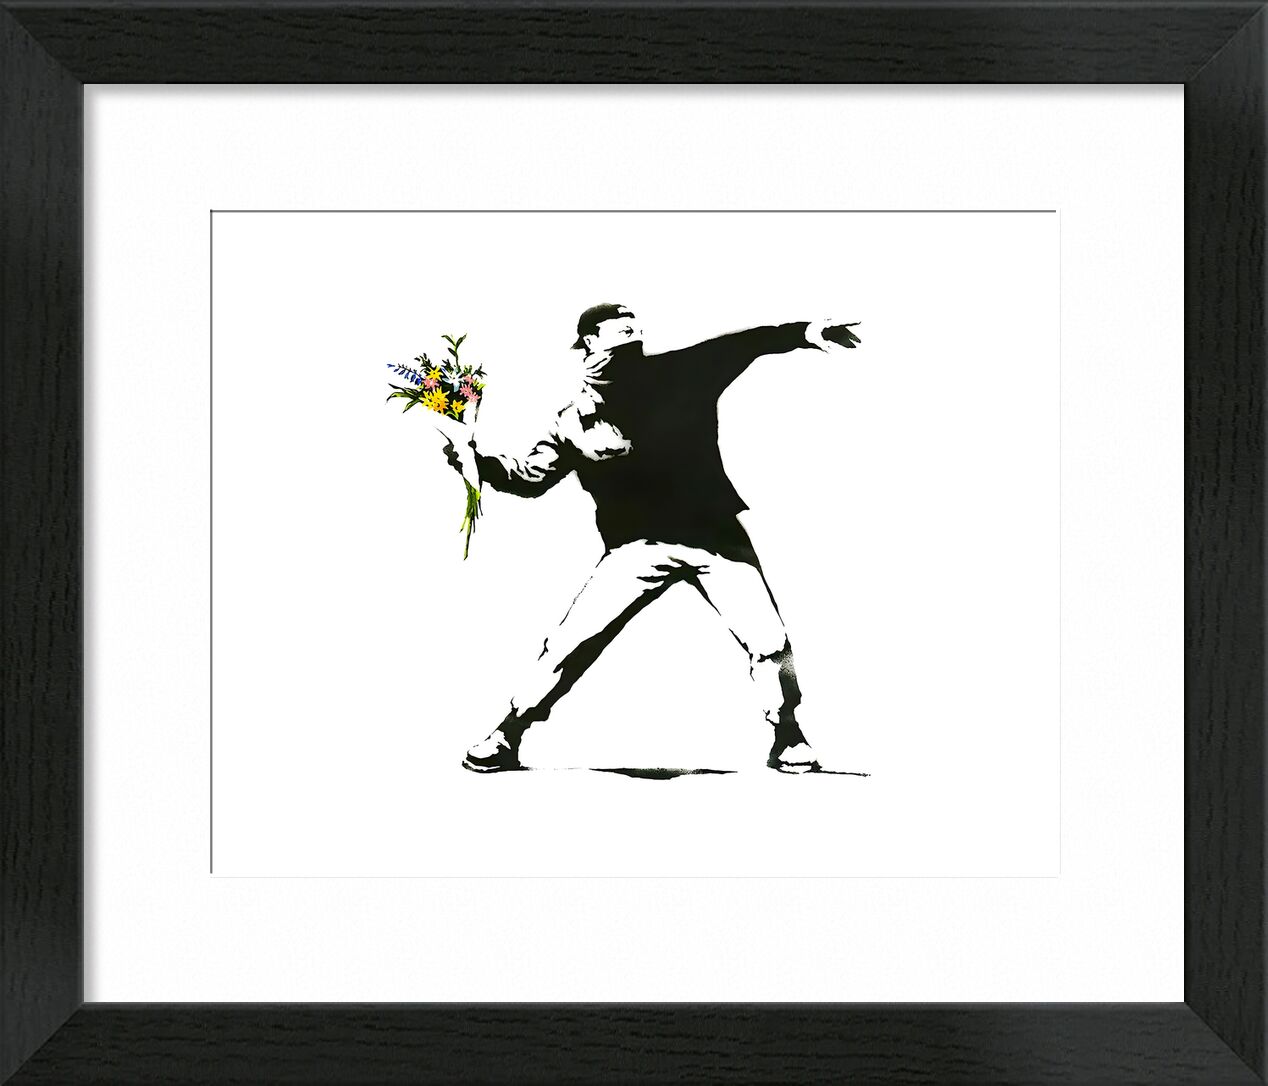 Flower Chucker - BANKSY von Bildende Kunst, Prodi Art, banksy, Straßenkunst, Blume, Graffiti, Startprogramm